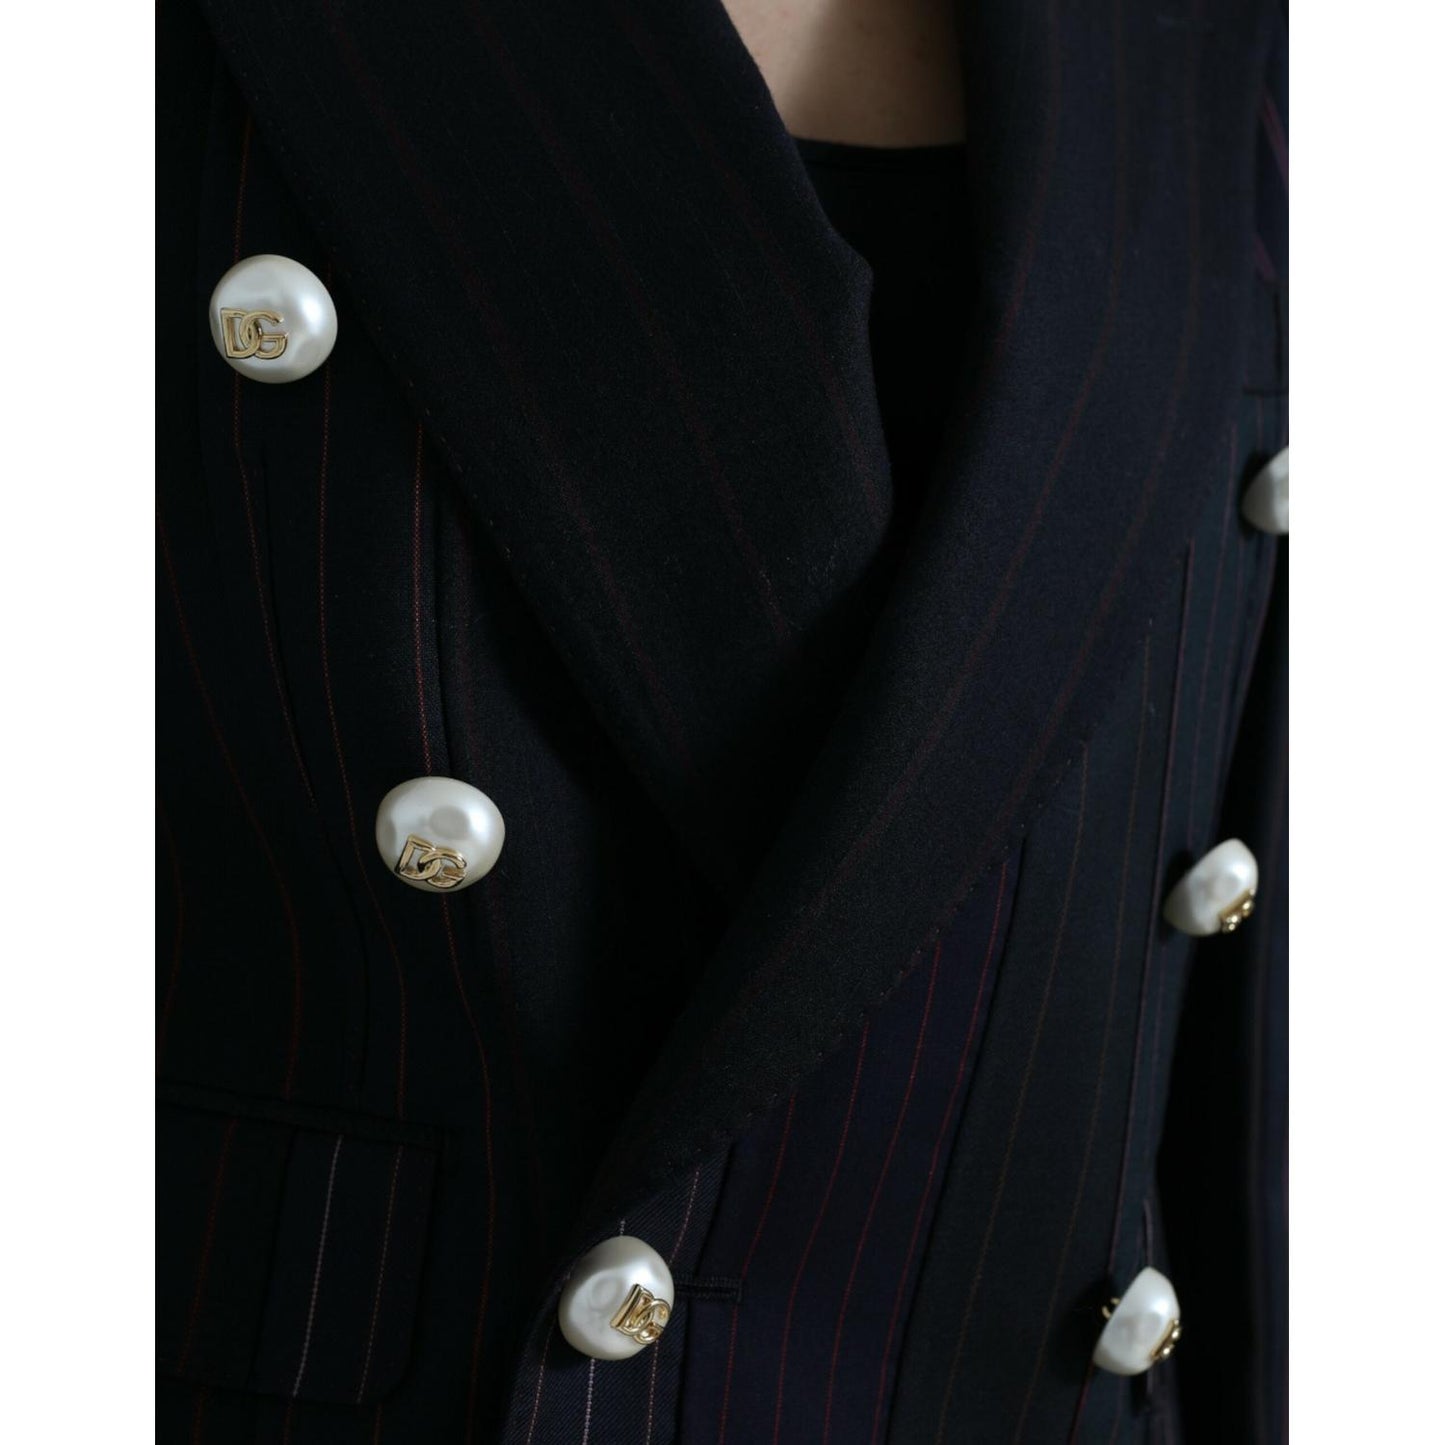 Dolce & Gabbana Elegant Striped Double Breasted Wool Blazer black-striped-sicilia-double-breasted-jacket